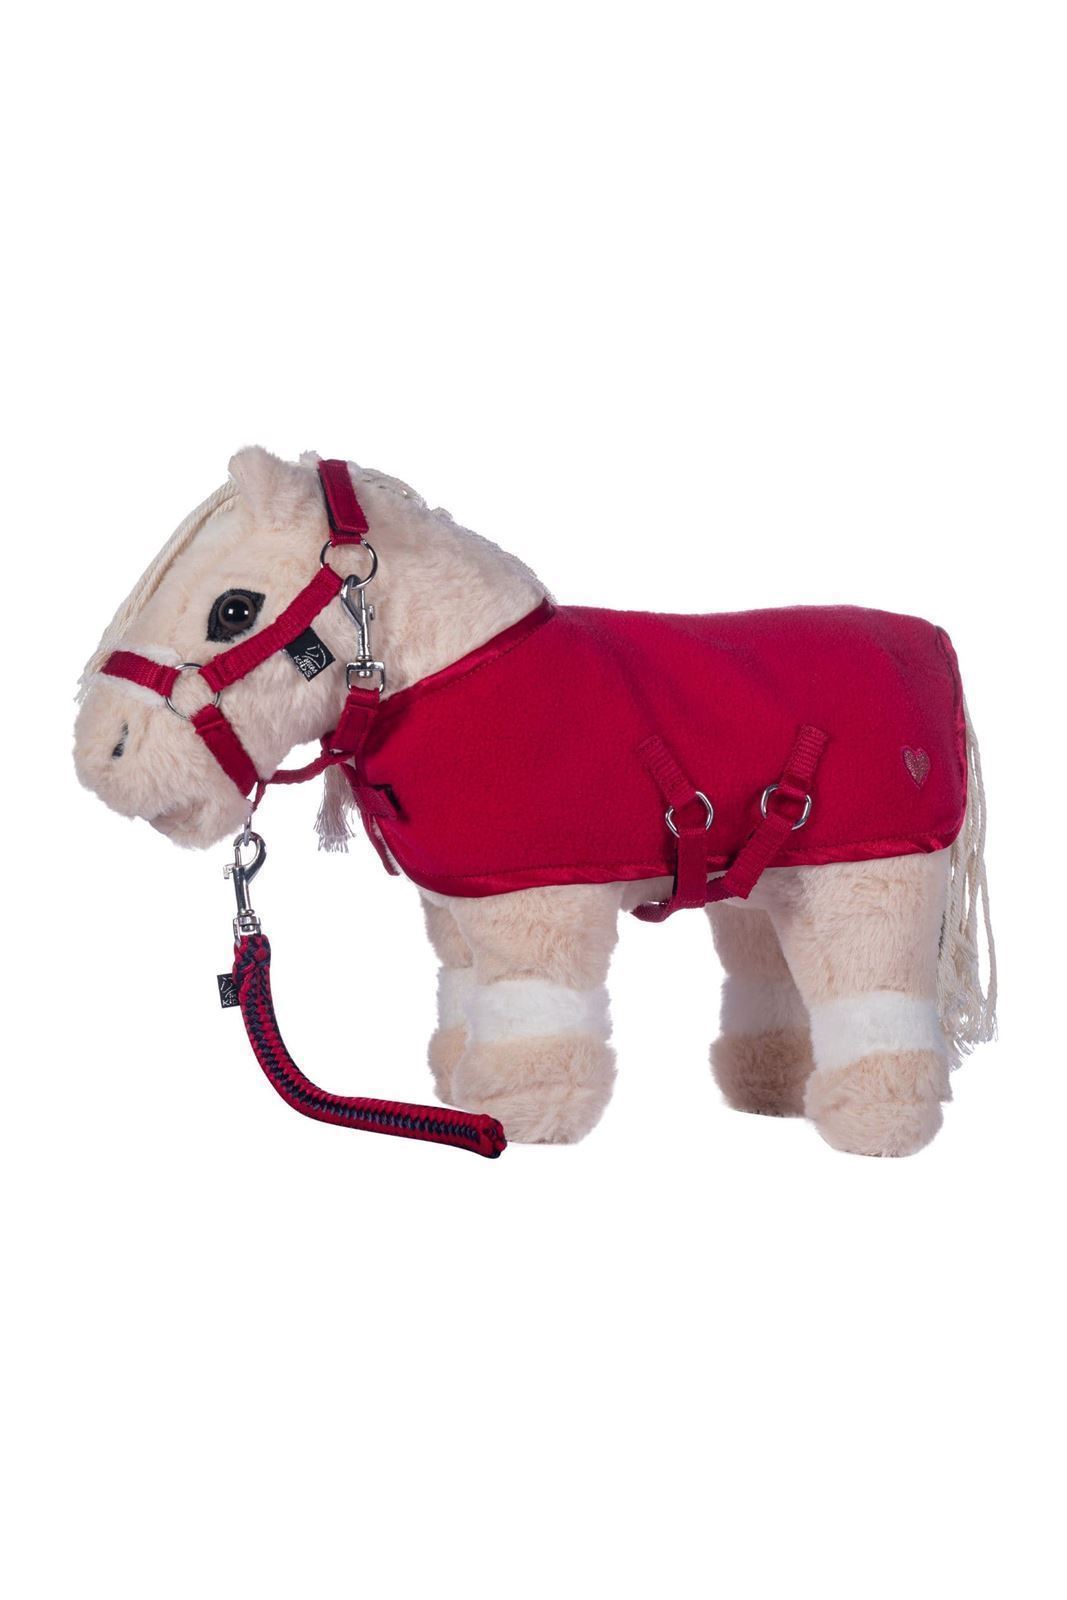 Set accesorios Cuddle pony HKM Sports Equipment Manta, cabezada y ramal, color rosa fucsia - Imagen 5